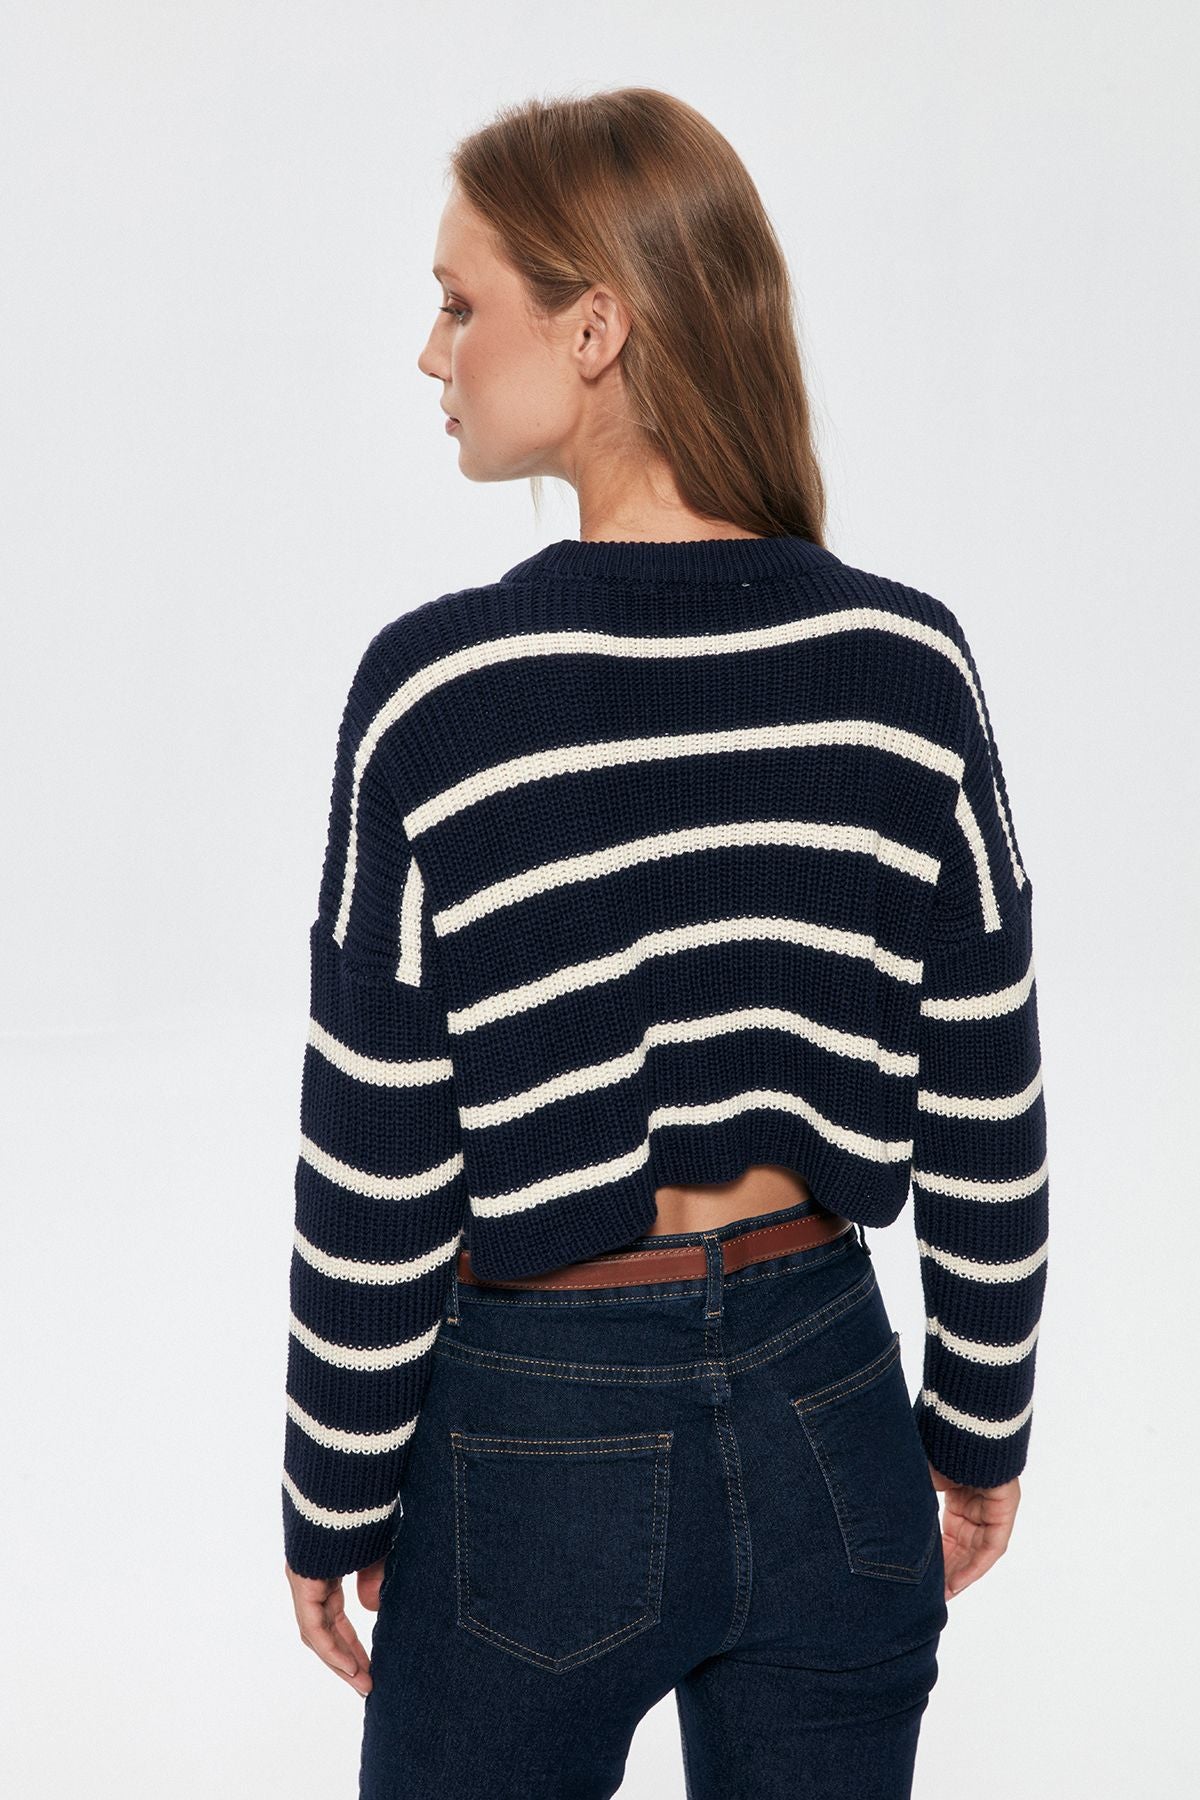 Stripe Detailed Crop Knitwear Sweater Navy Blue-Cream